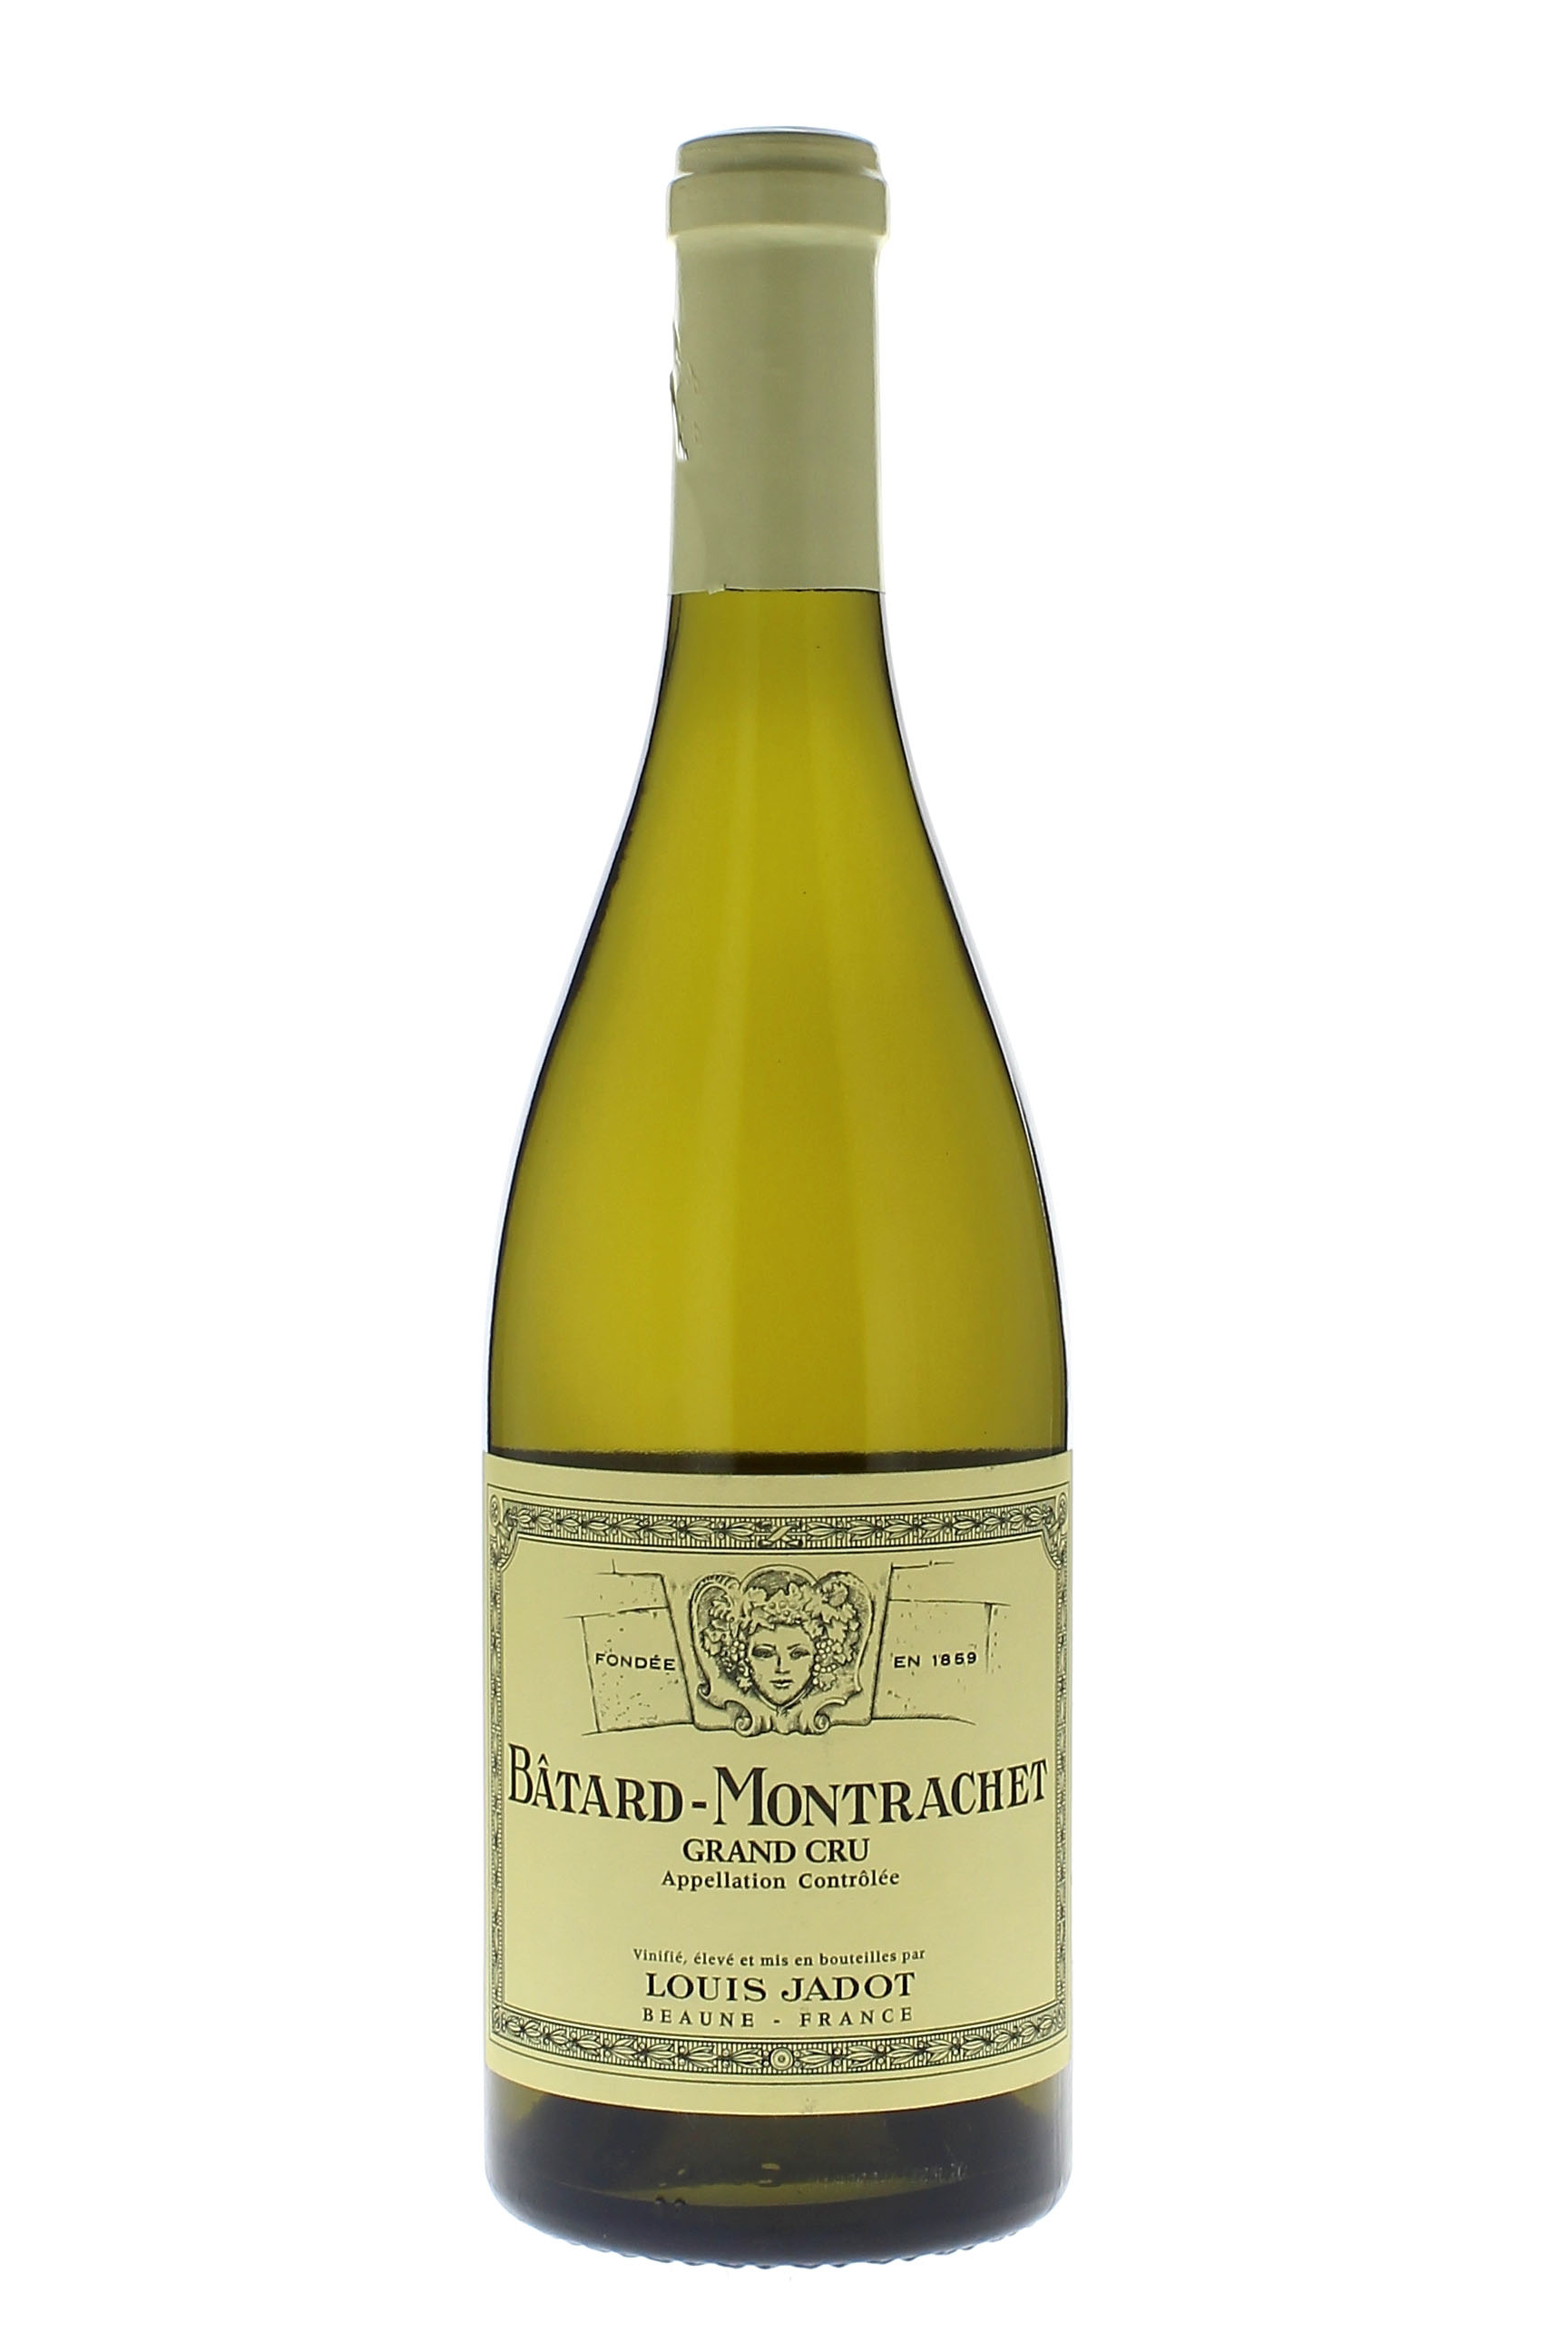 Batard montrachet 2014  Jadot Louis, Bourgogne blanc